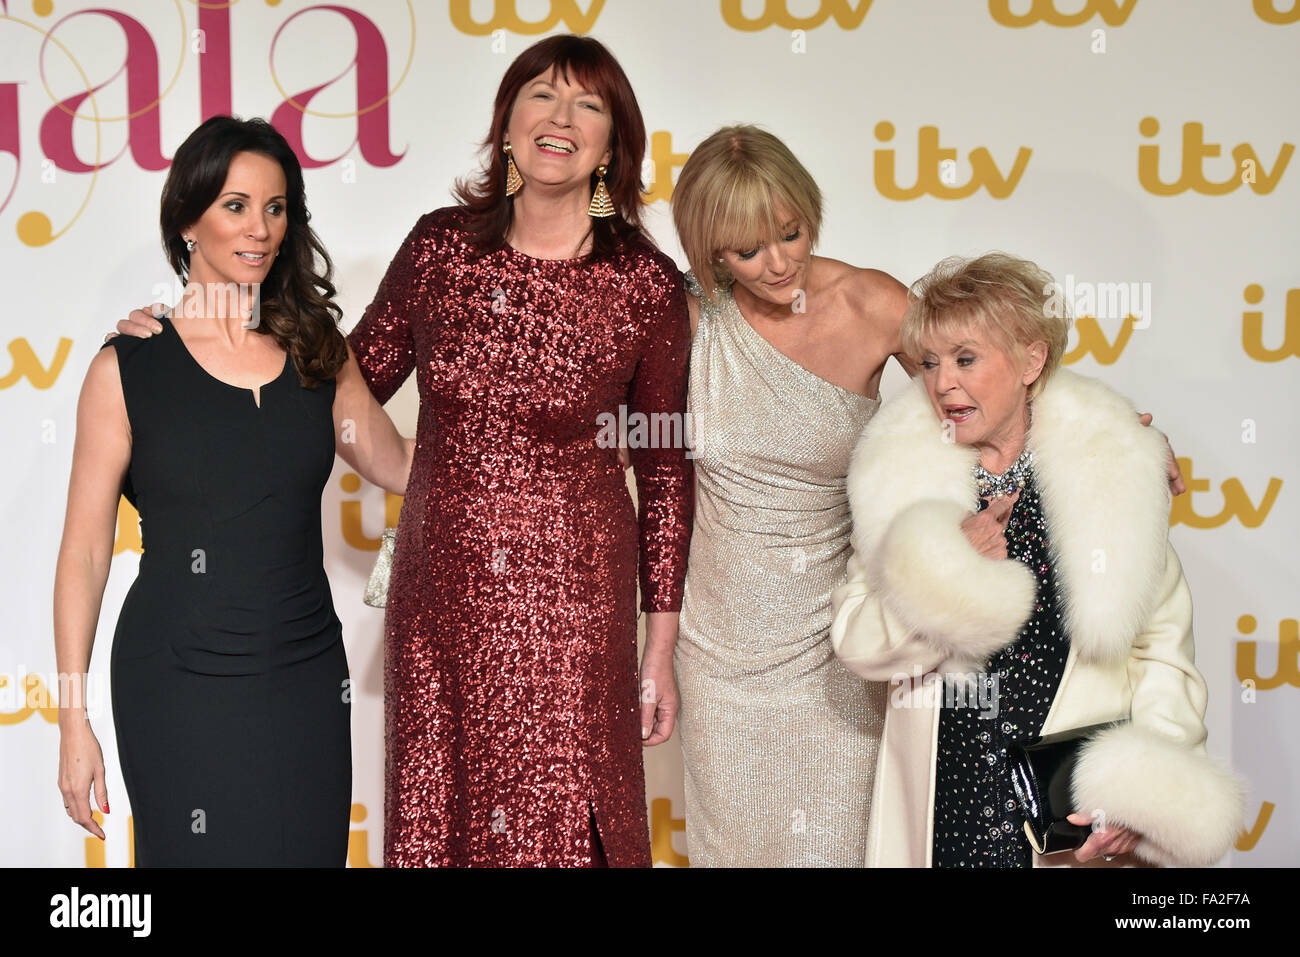 ITV Gala held at the London Palladium - Arrivals.  Featuring: Andrea McLean, Janet Street-Porter,  Gloria Hunniford, Jane Moore Where: London, United Kingdom When: 19 Nov 2015 Stock Photo